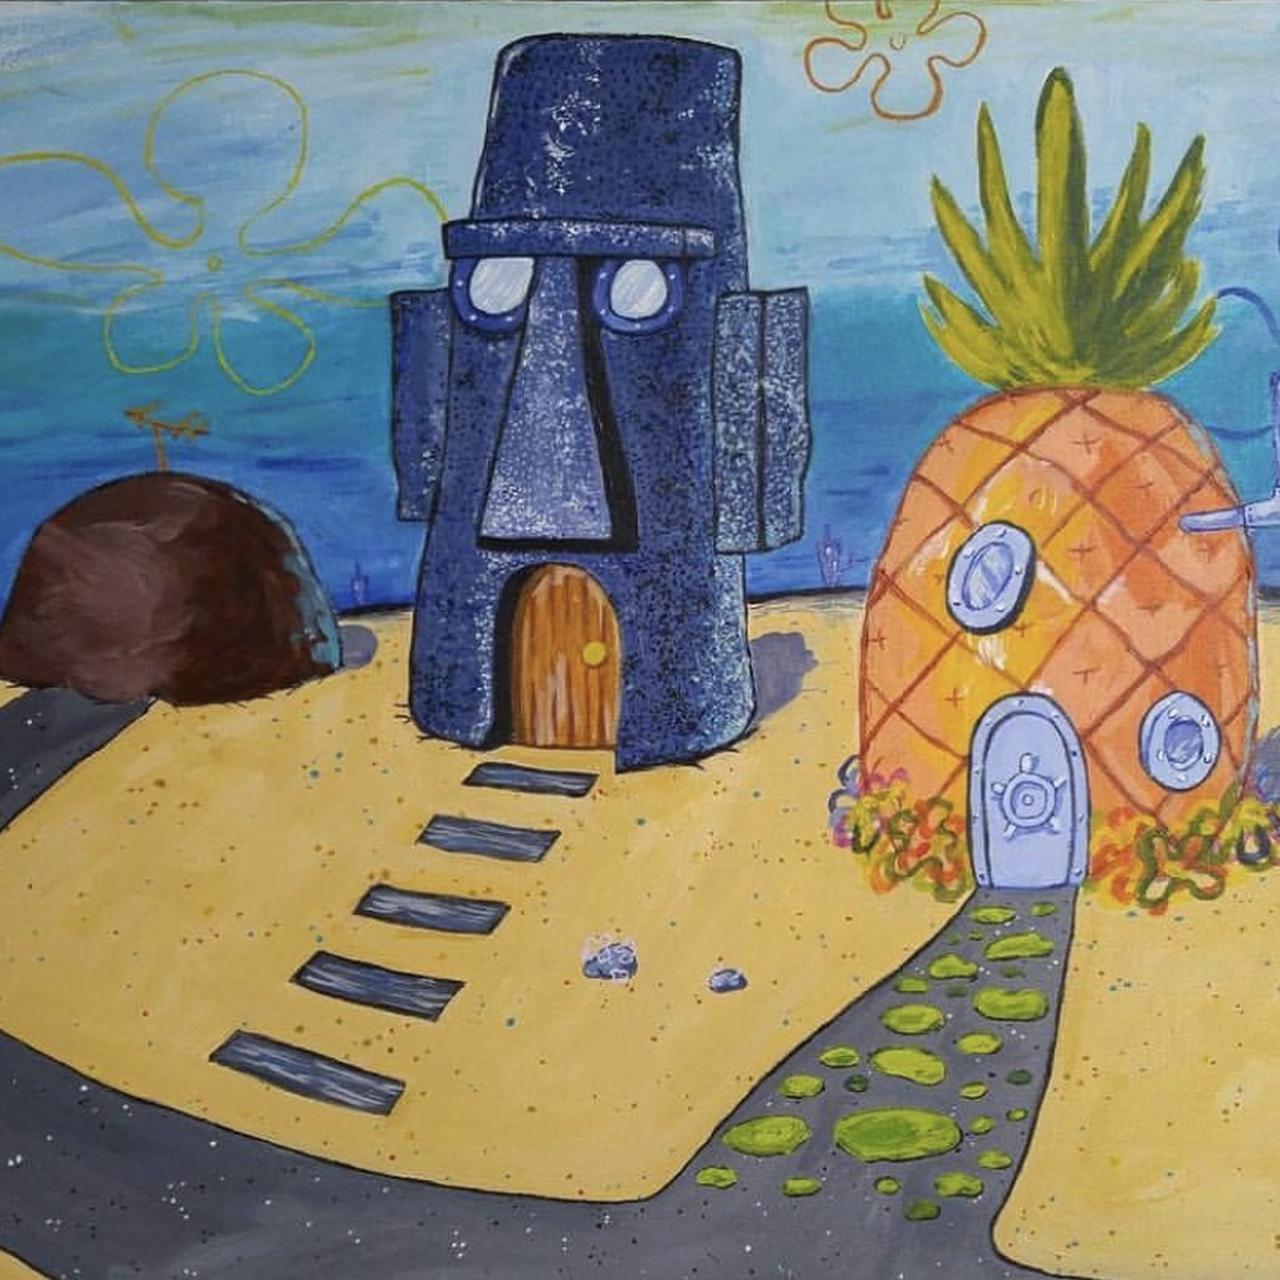 Sad spongebob 5x7 acrylic painting - Depop